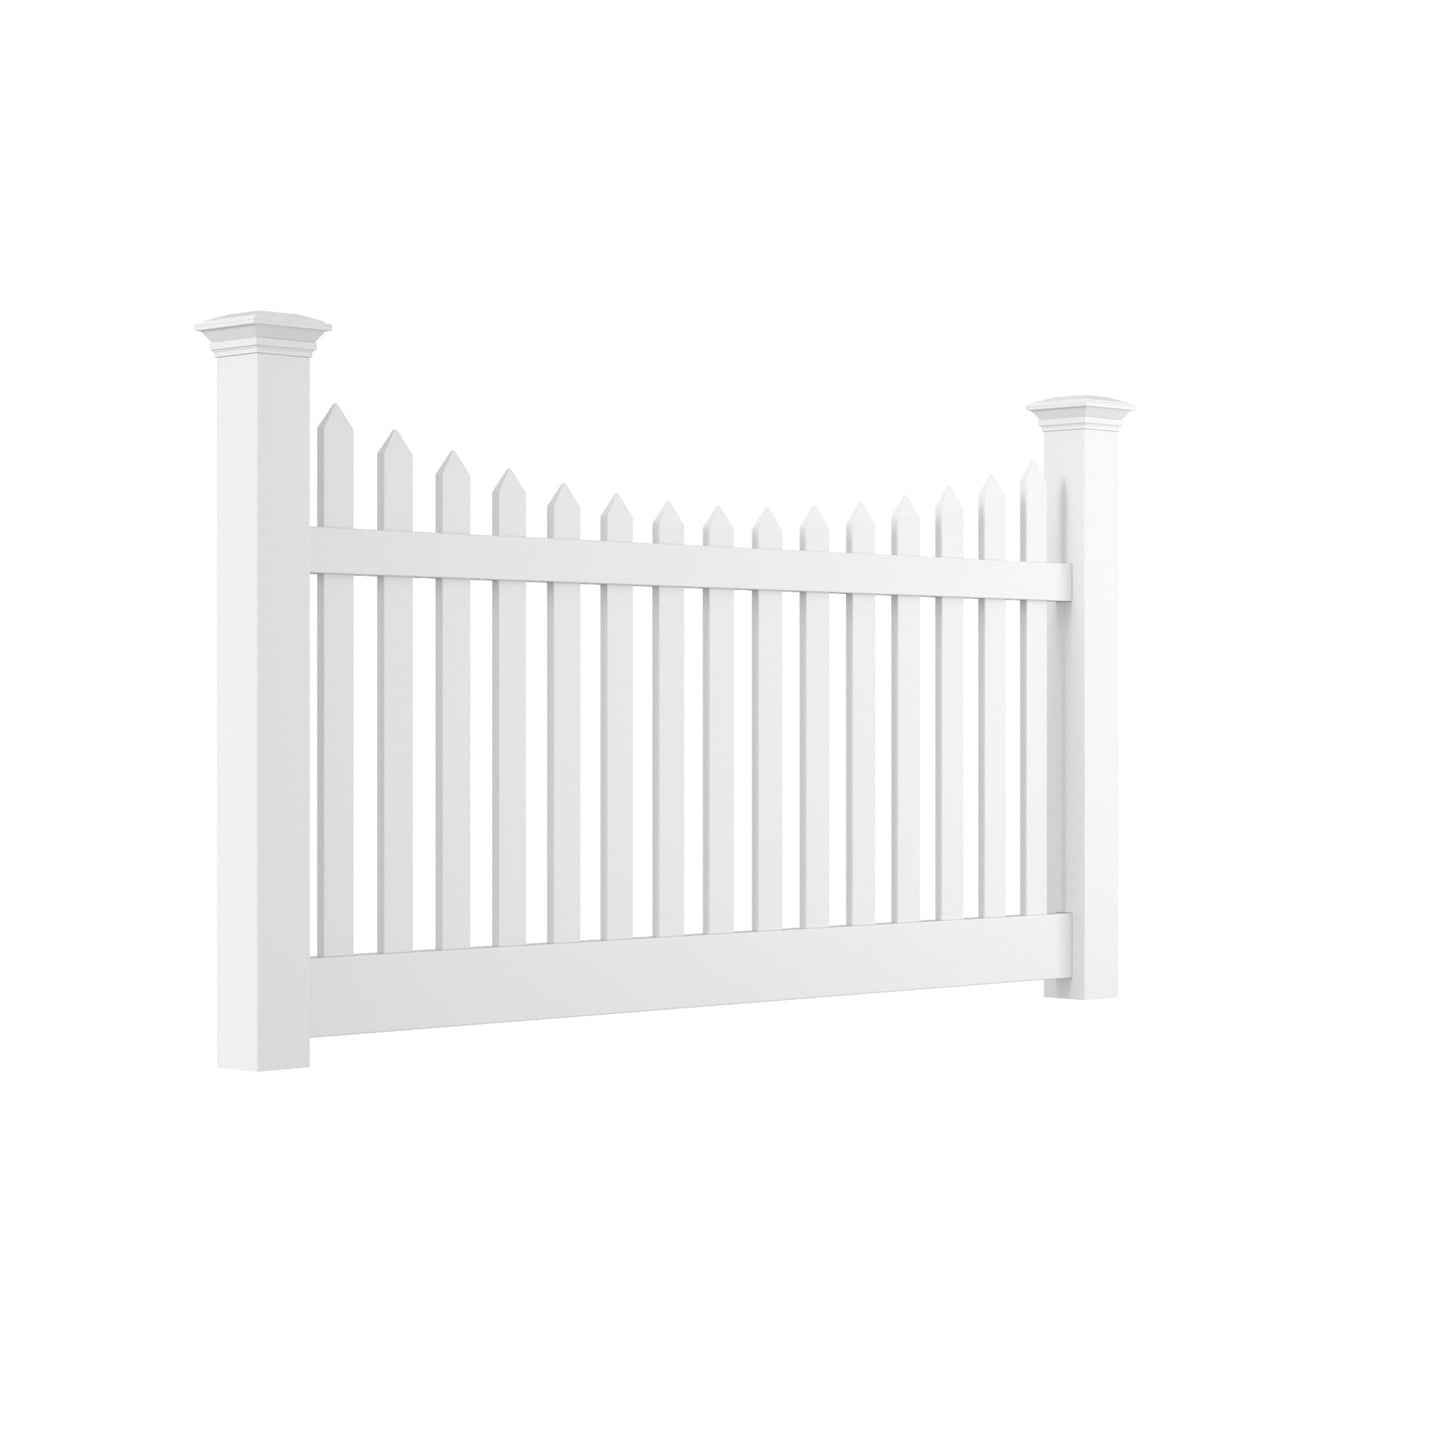 Primrose Scallop Haven Series - Fence Panel - 4' x 8'-Vinyl Fence Panels-ActiveYards-White-FenceCenter